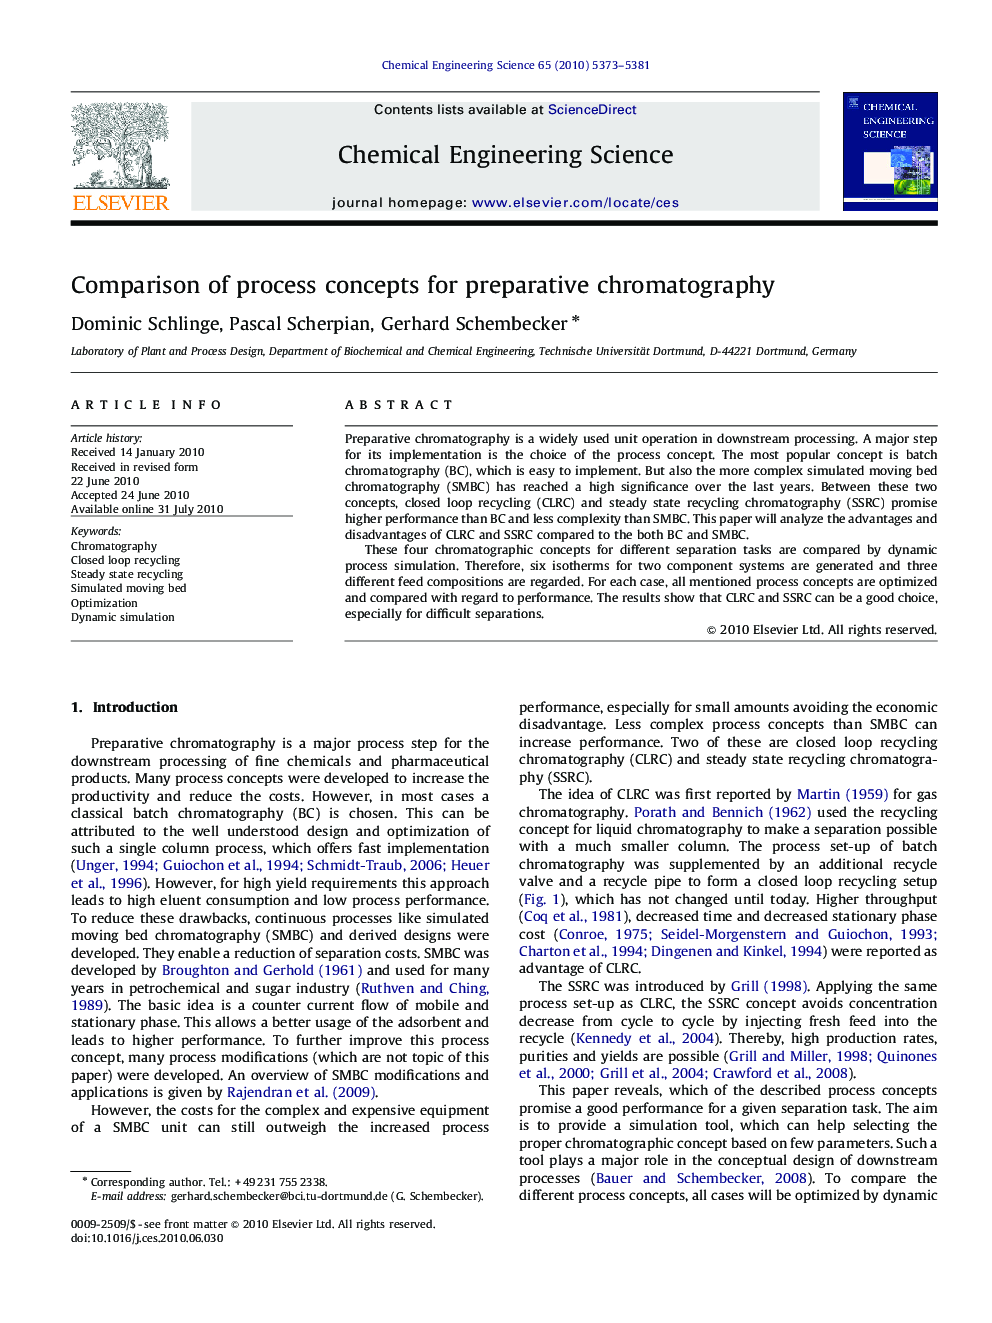 Comparison of process concepts for preparative chromatography